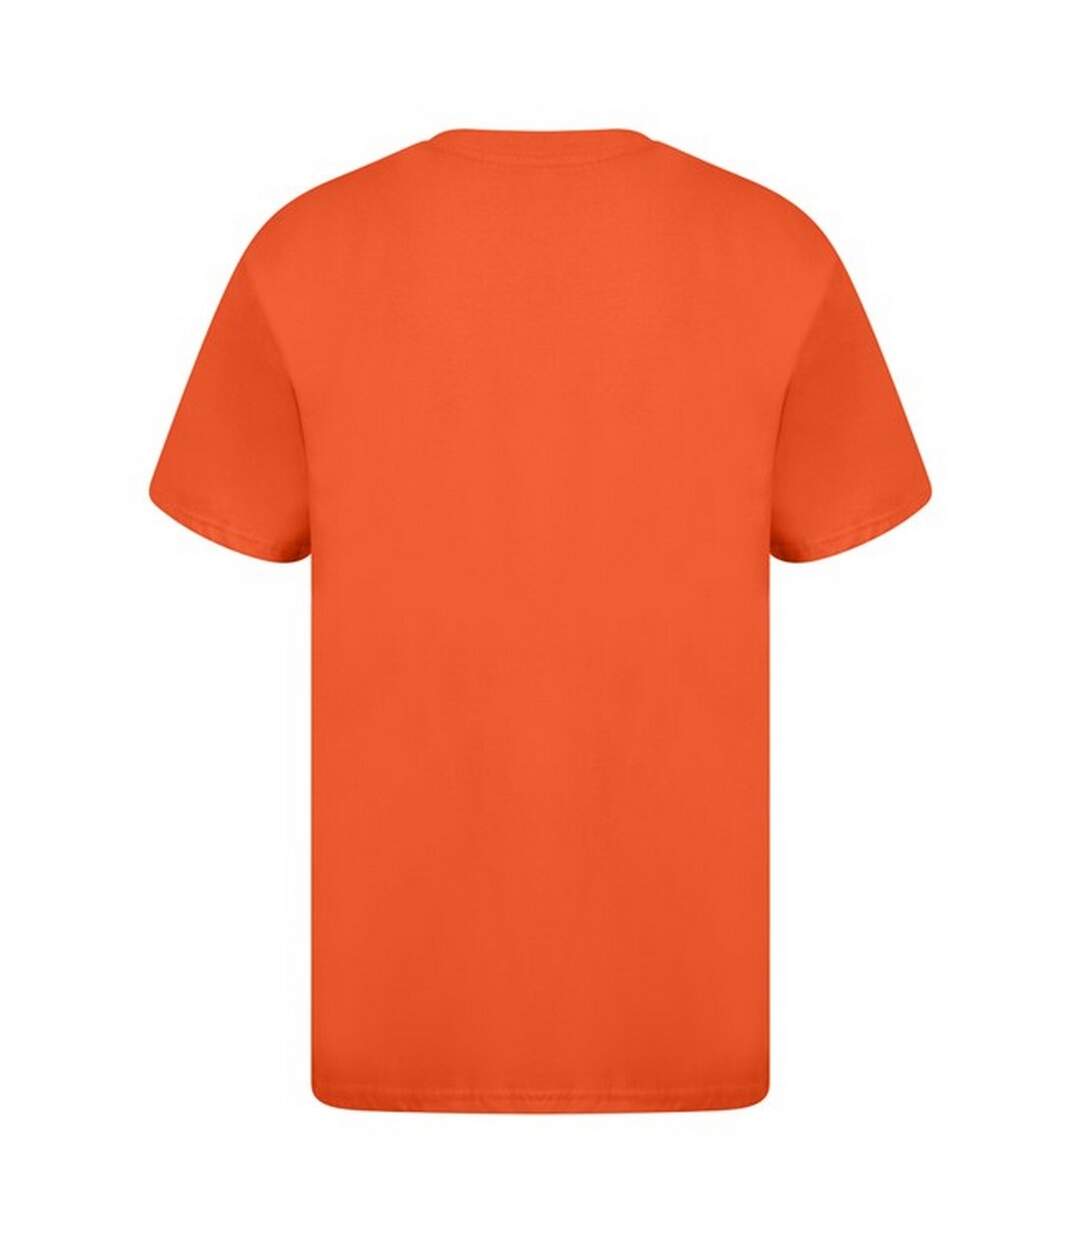 Casual - T-shirt manches courtes - Homme (Orange) - UTAB261